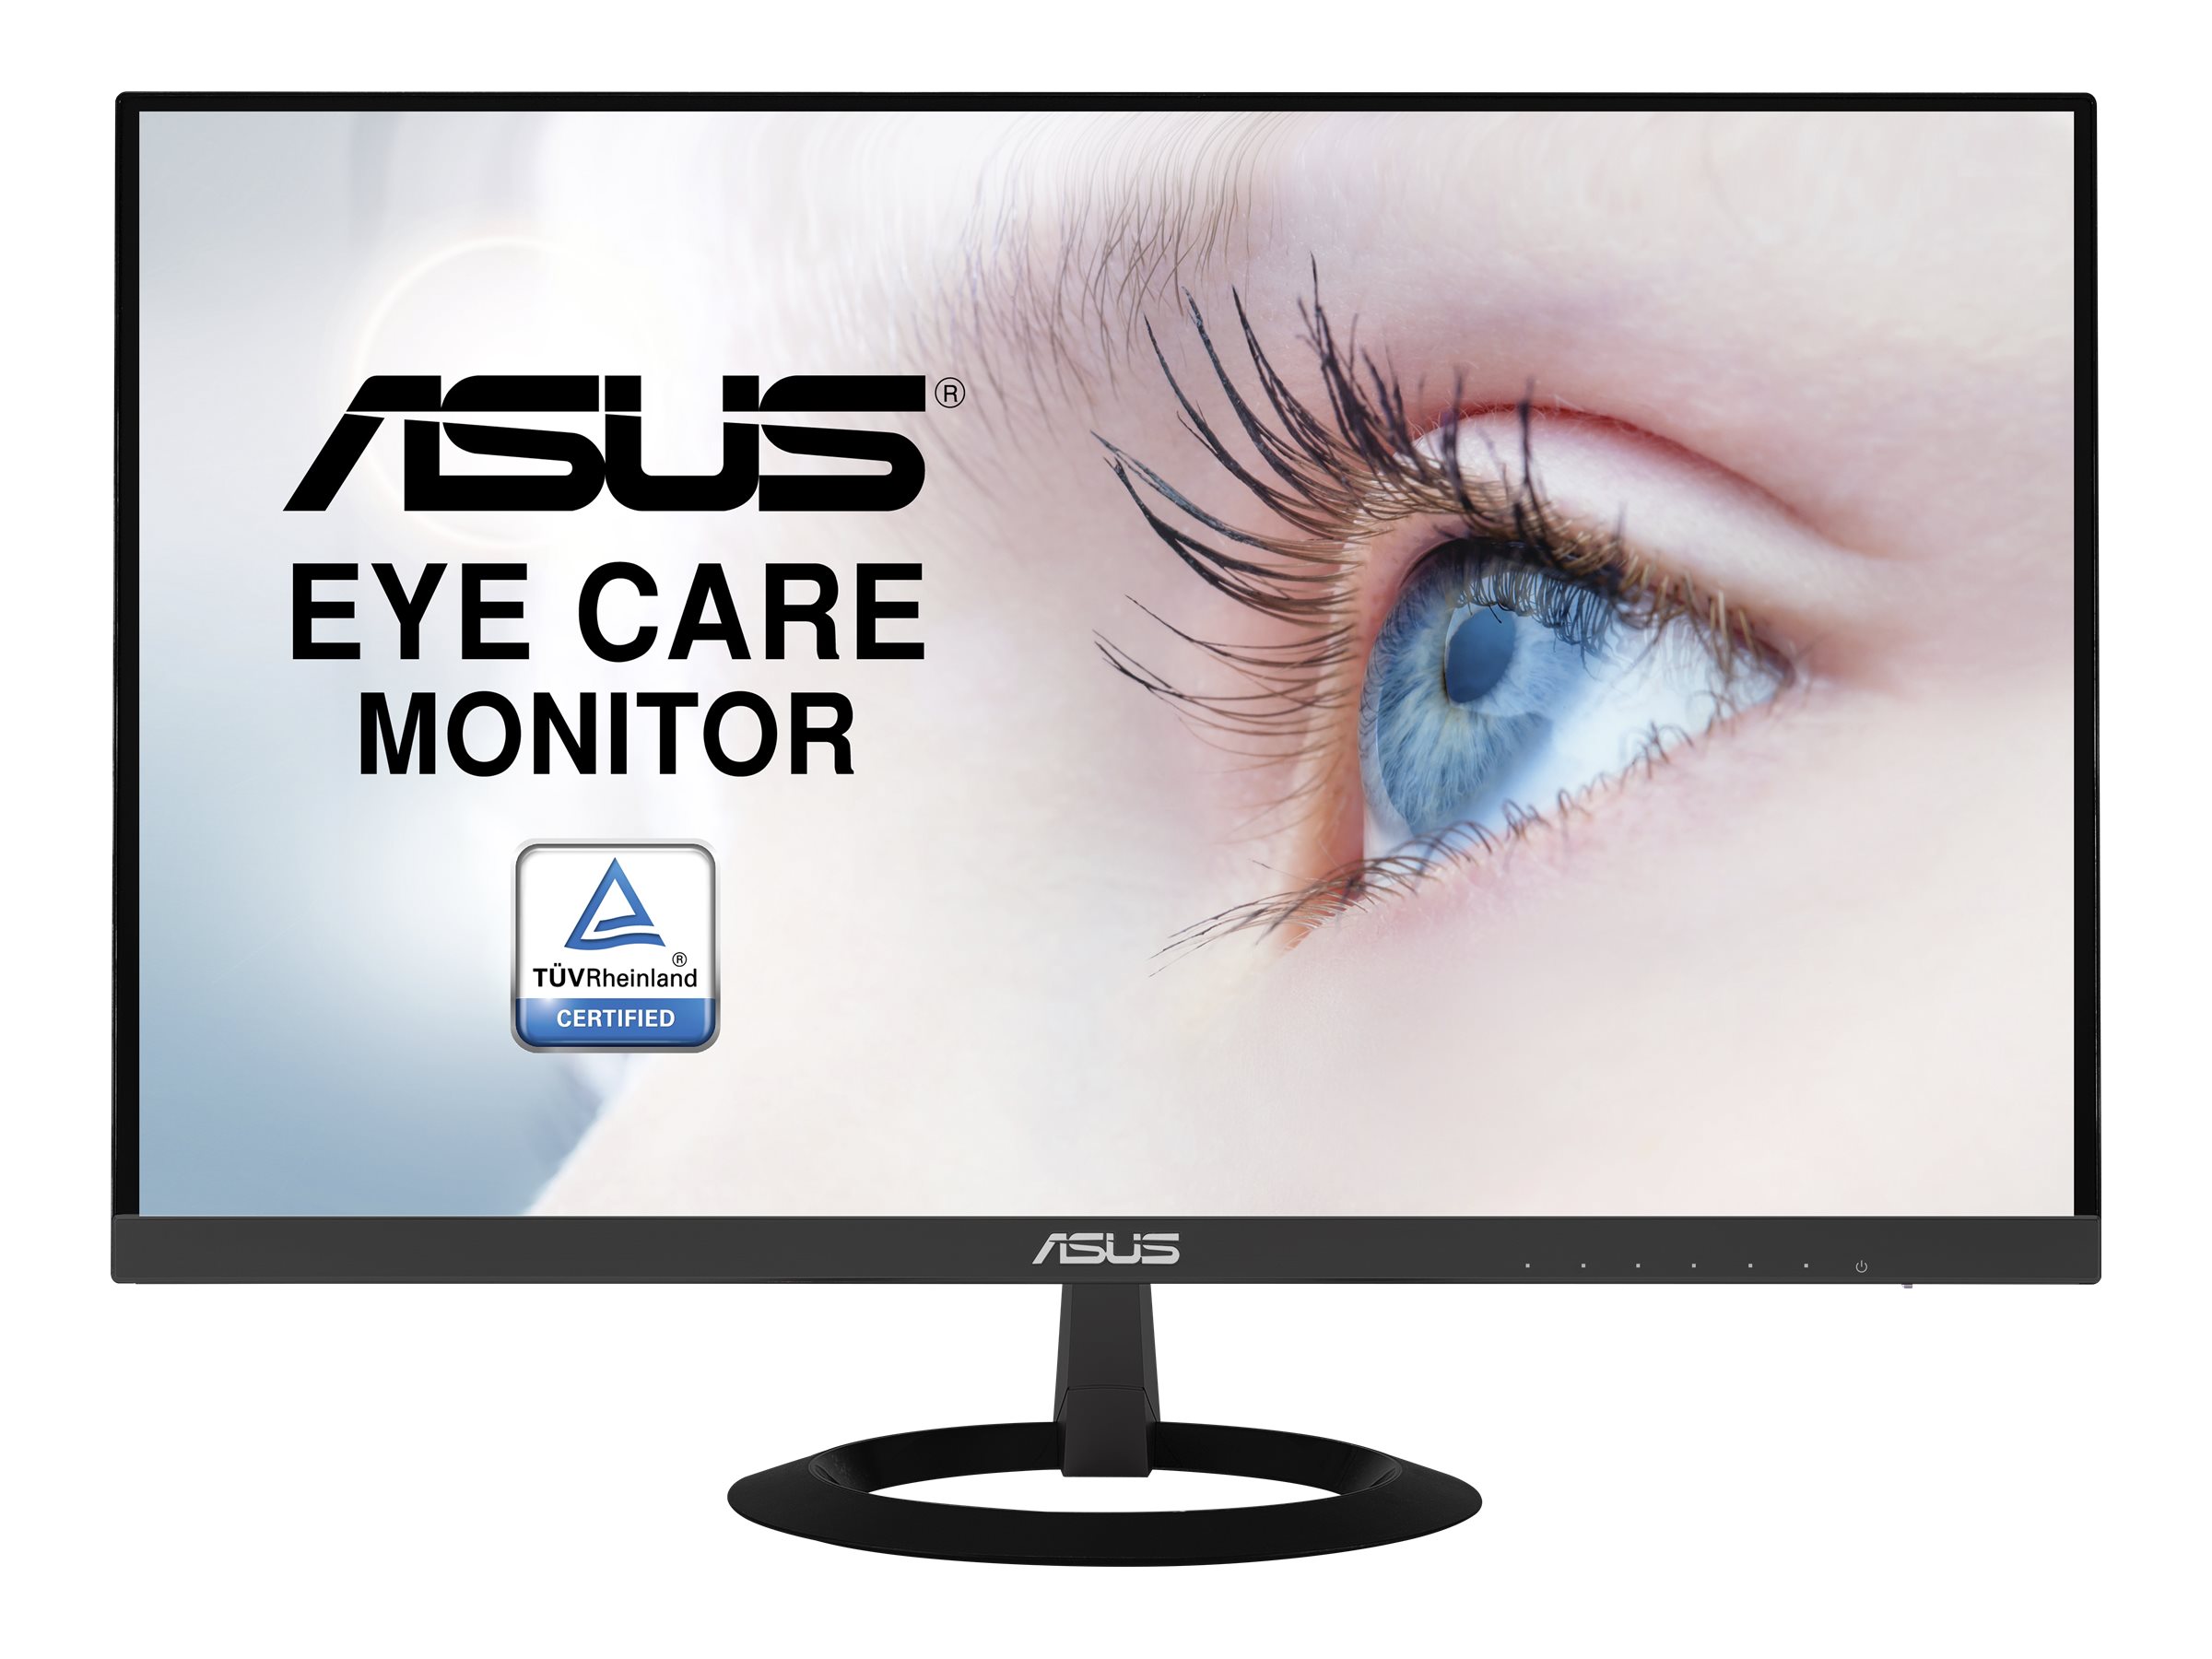 ASUS VZ239HE - LED-Monitor - 58.4 cm (23